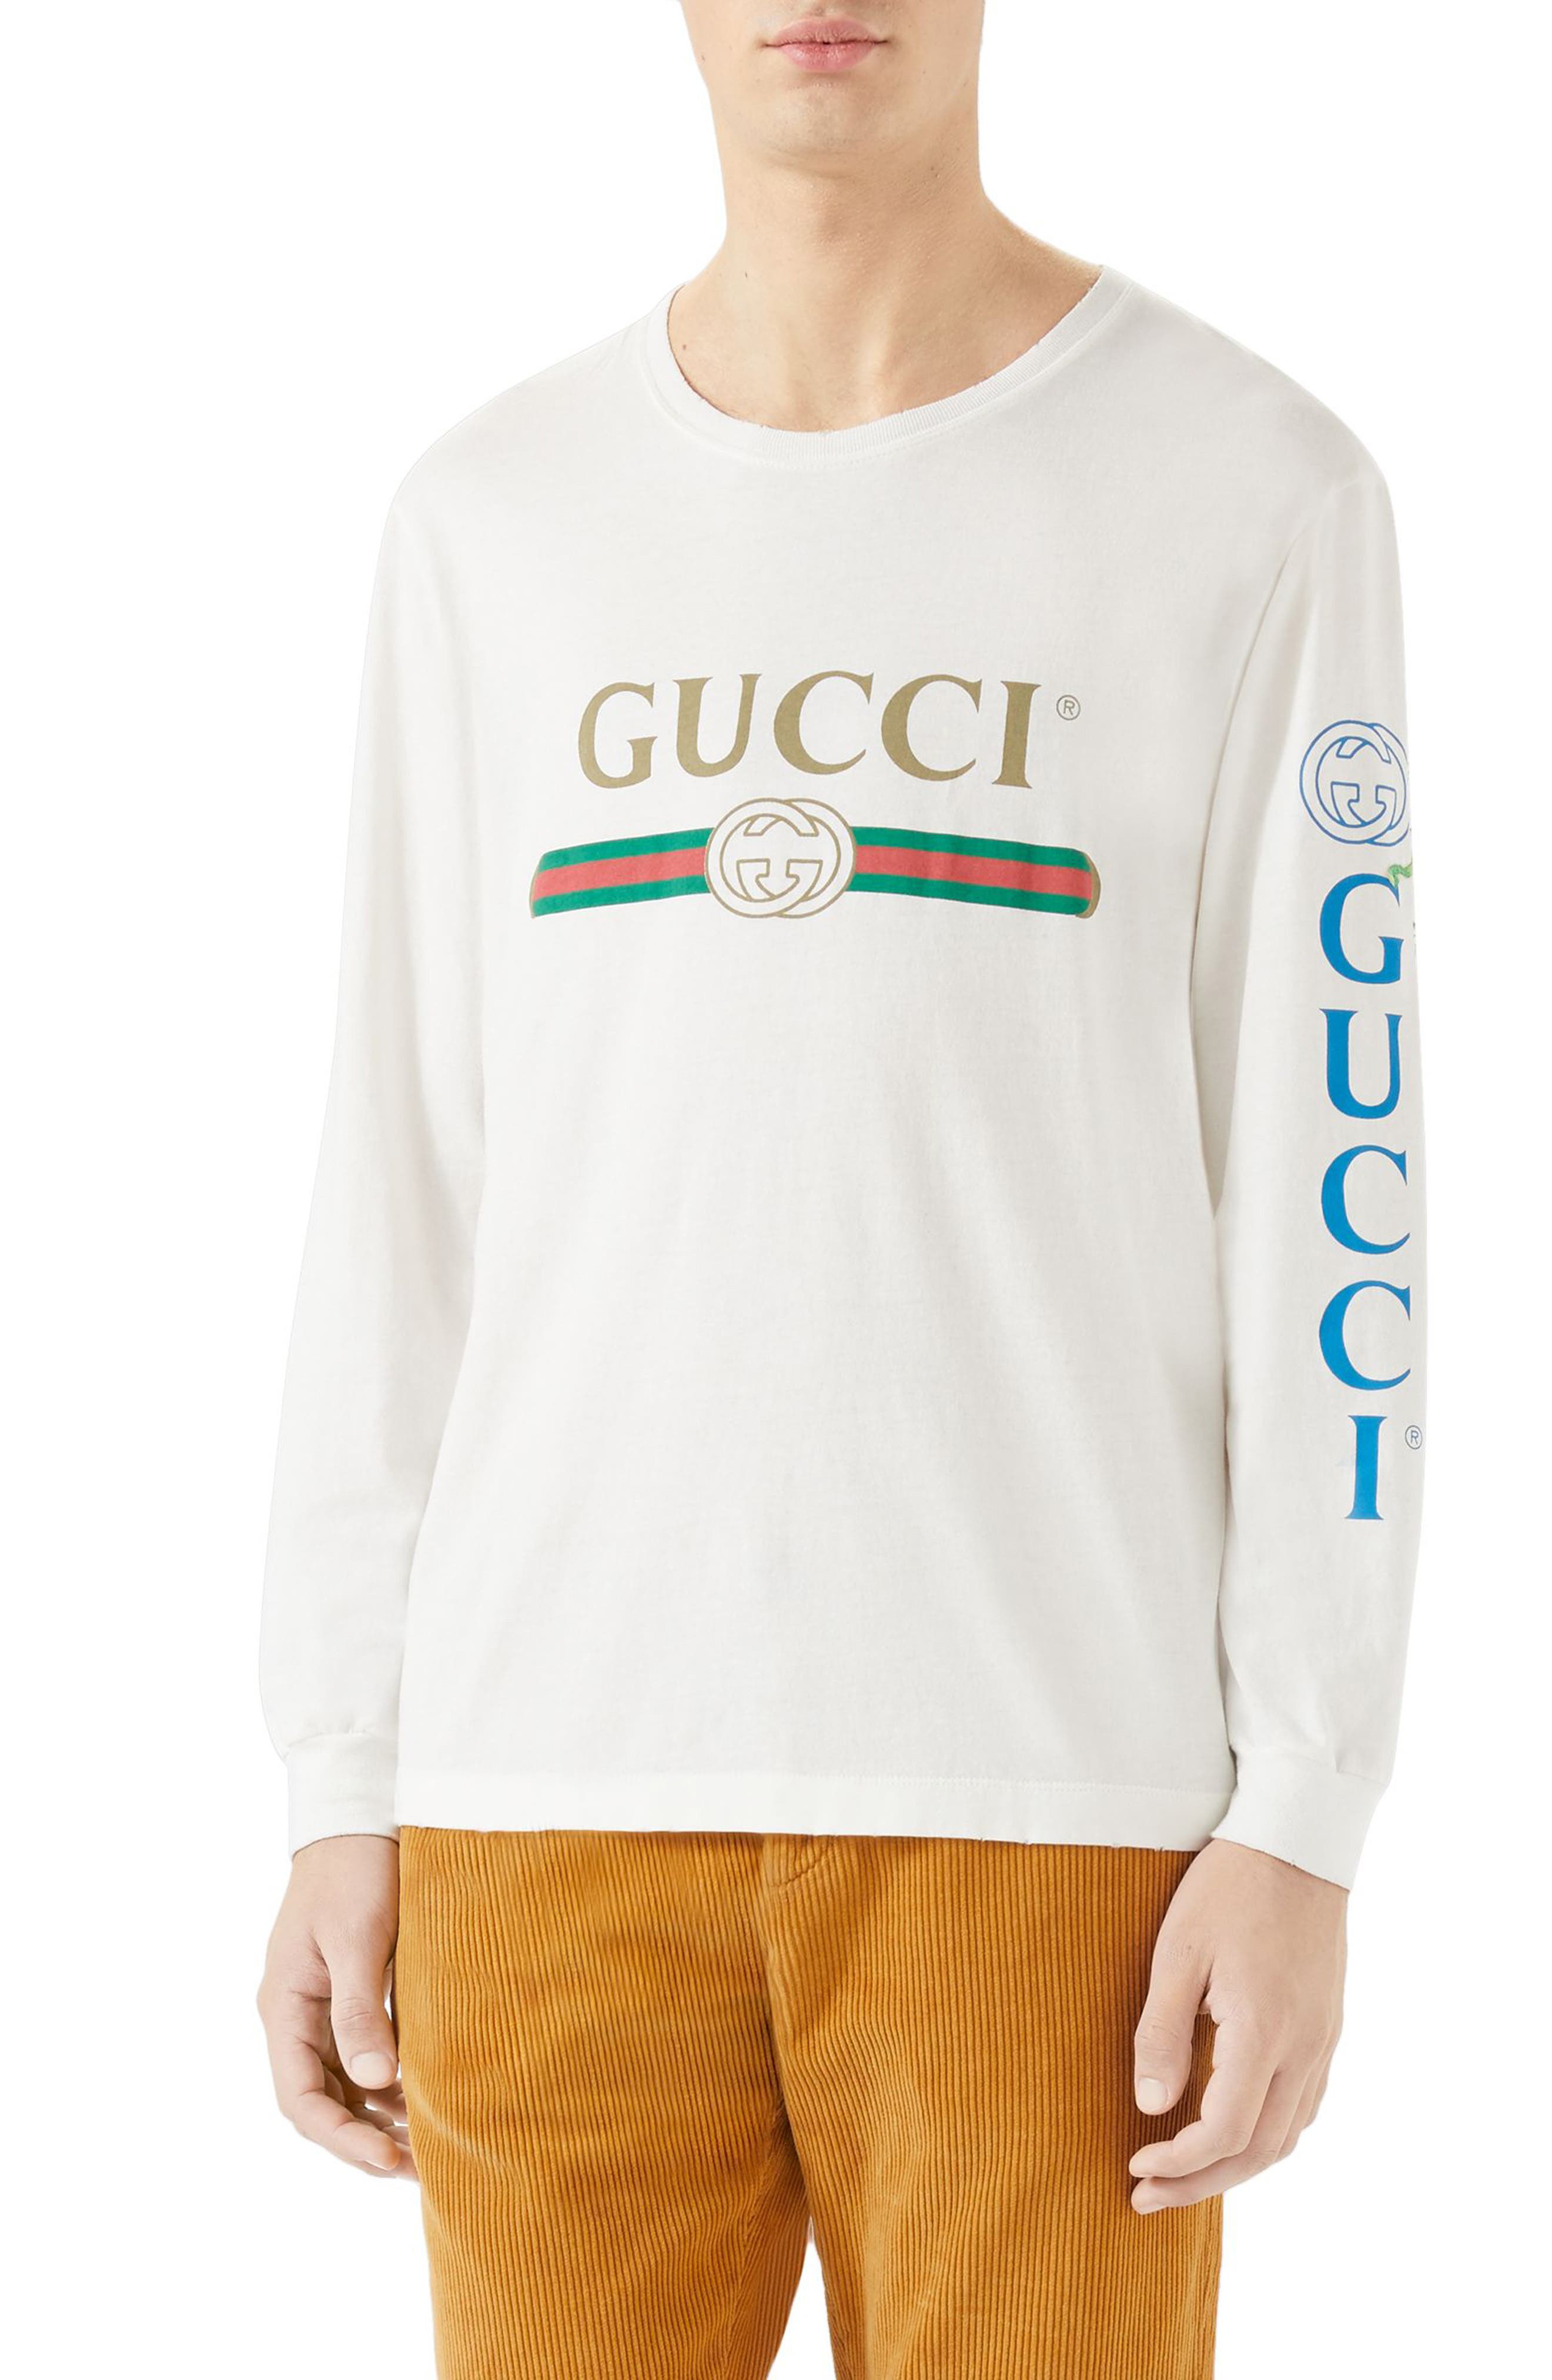 gucci long sleeve shirts